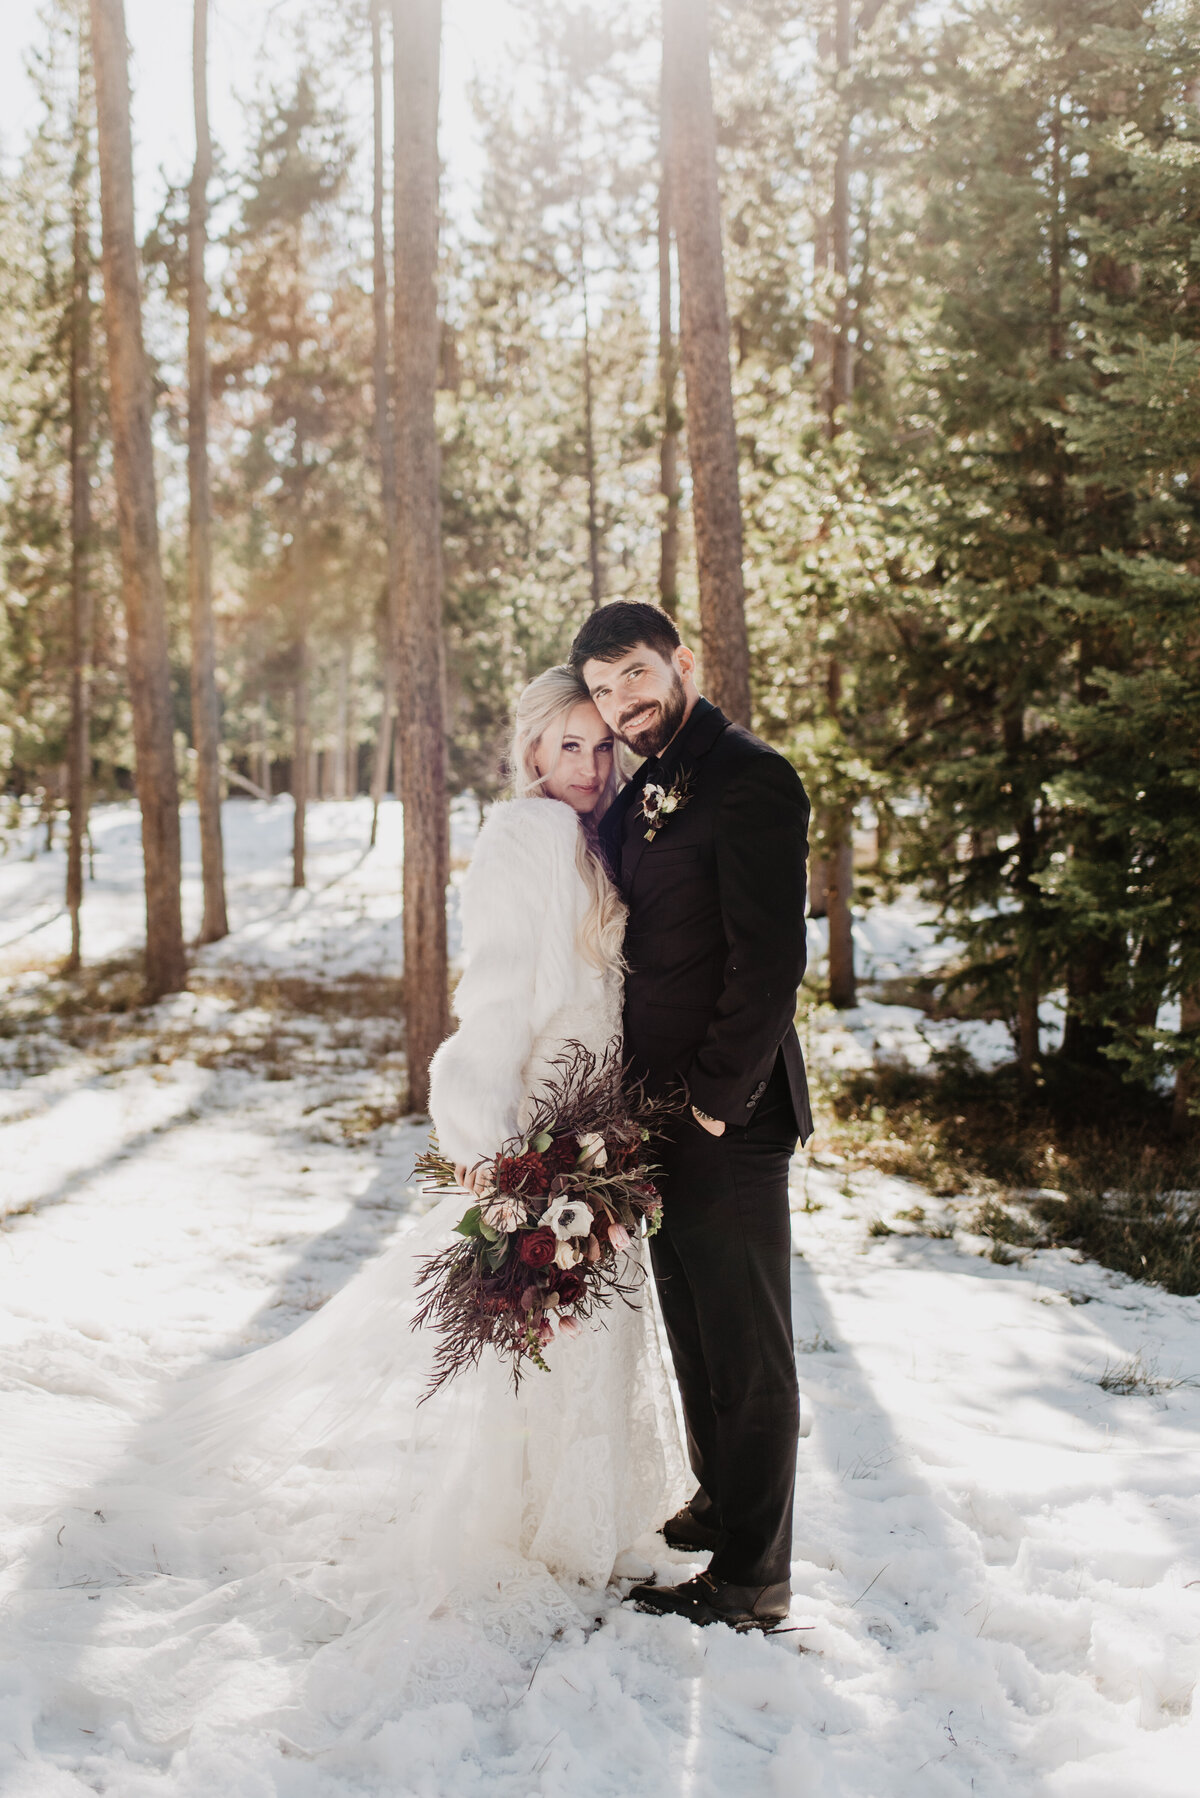 Jackson Hole Photographers capture bride and groom embracing